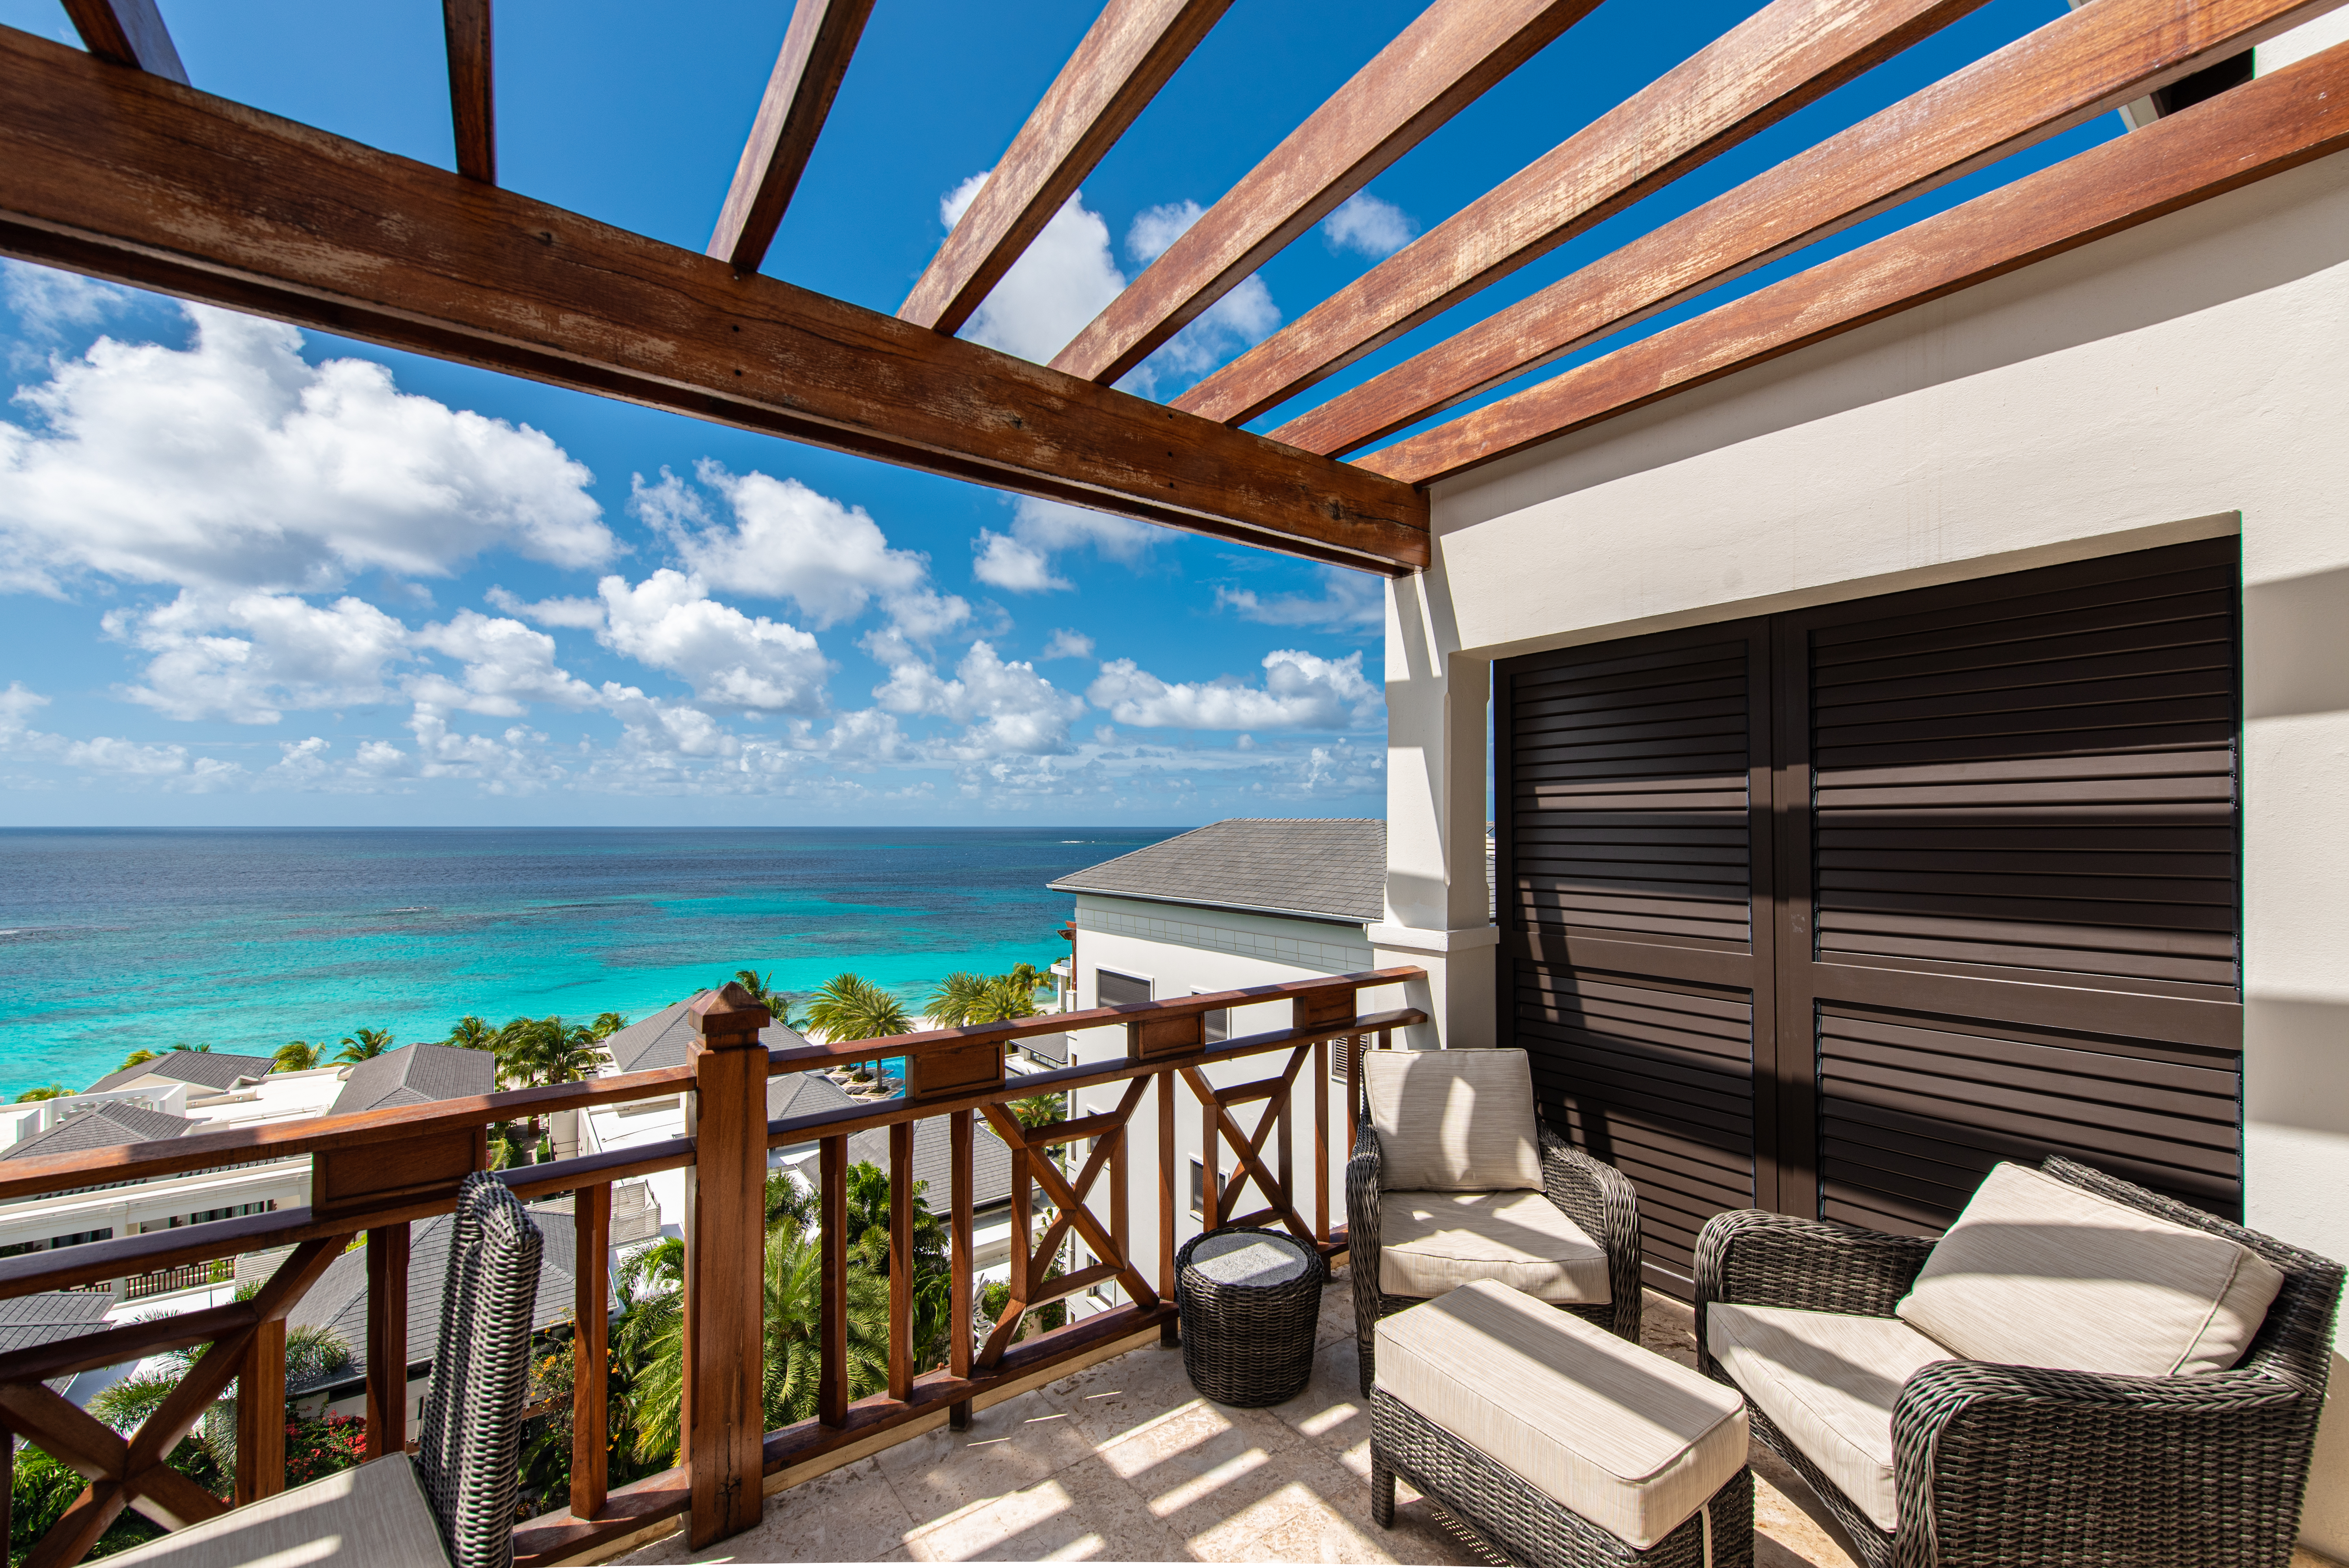 Lounge chairs on balcony overlooking ocean